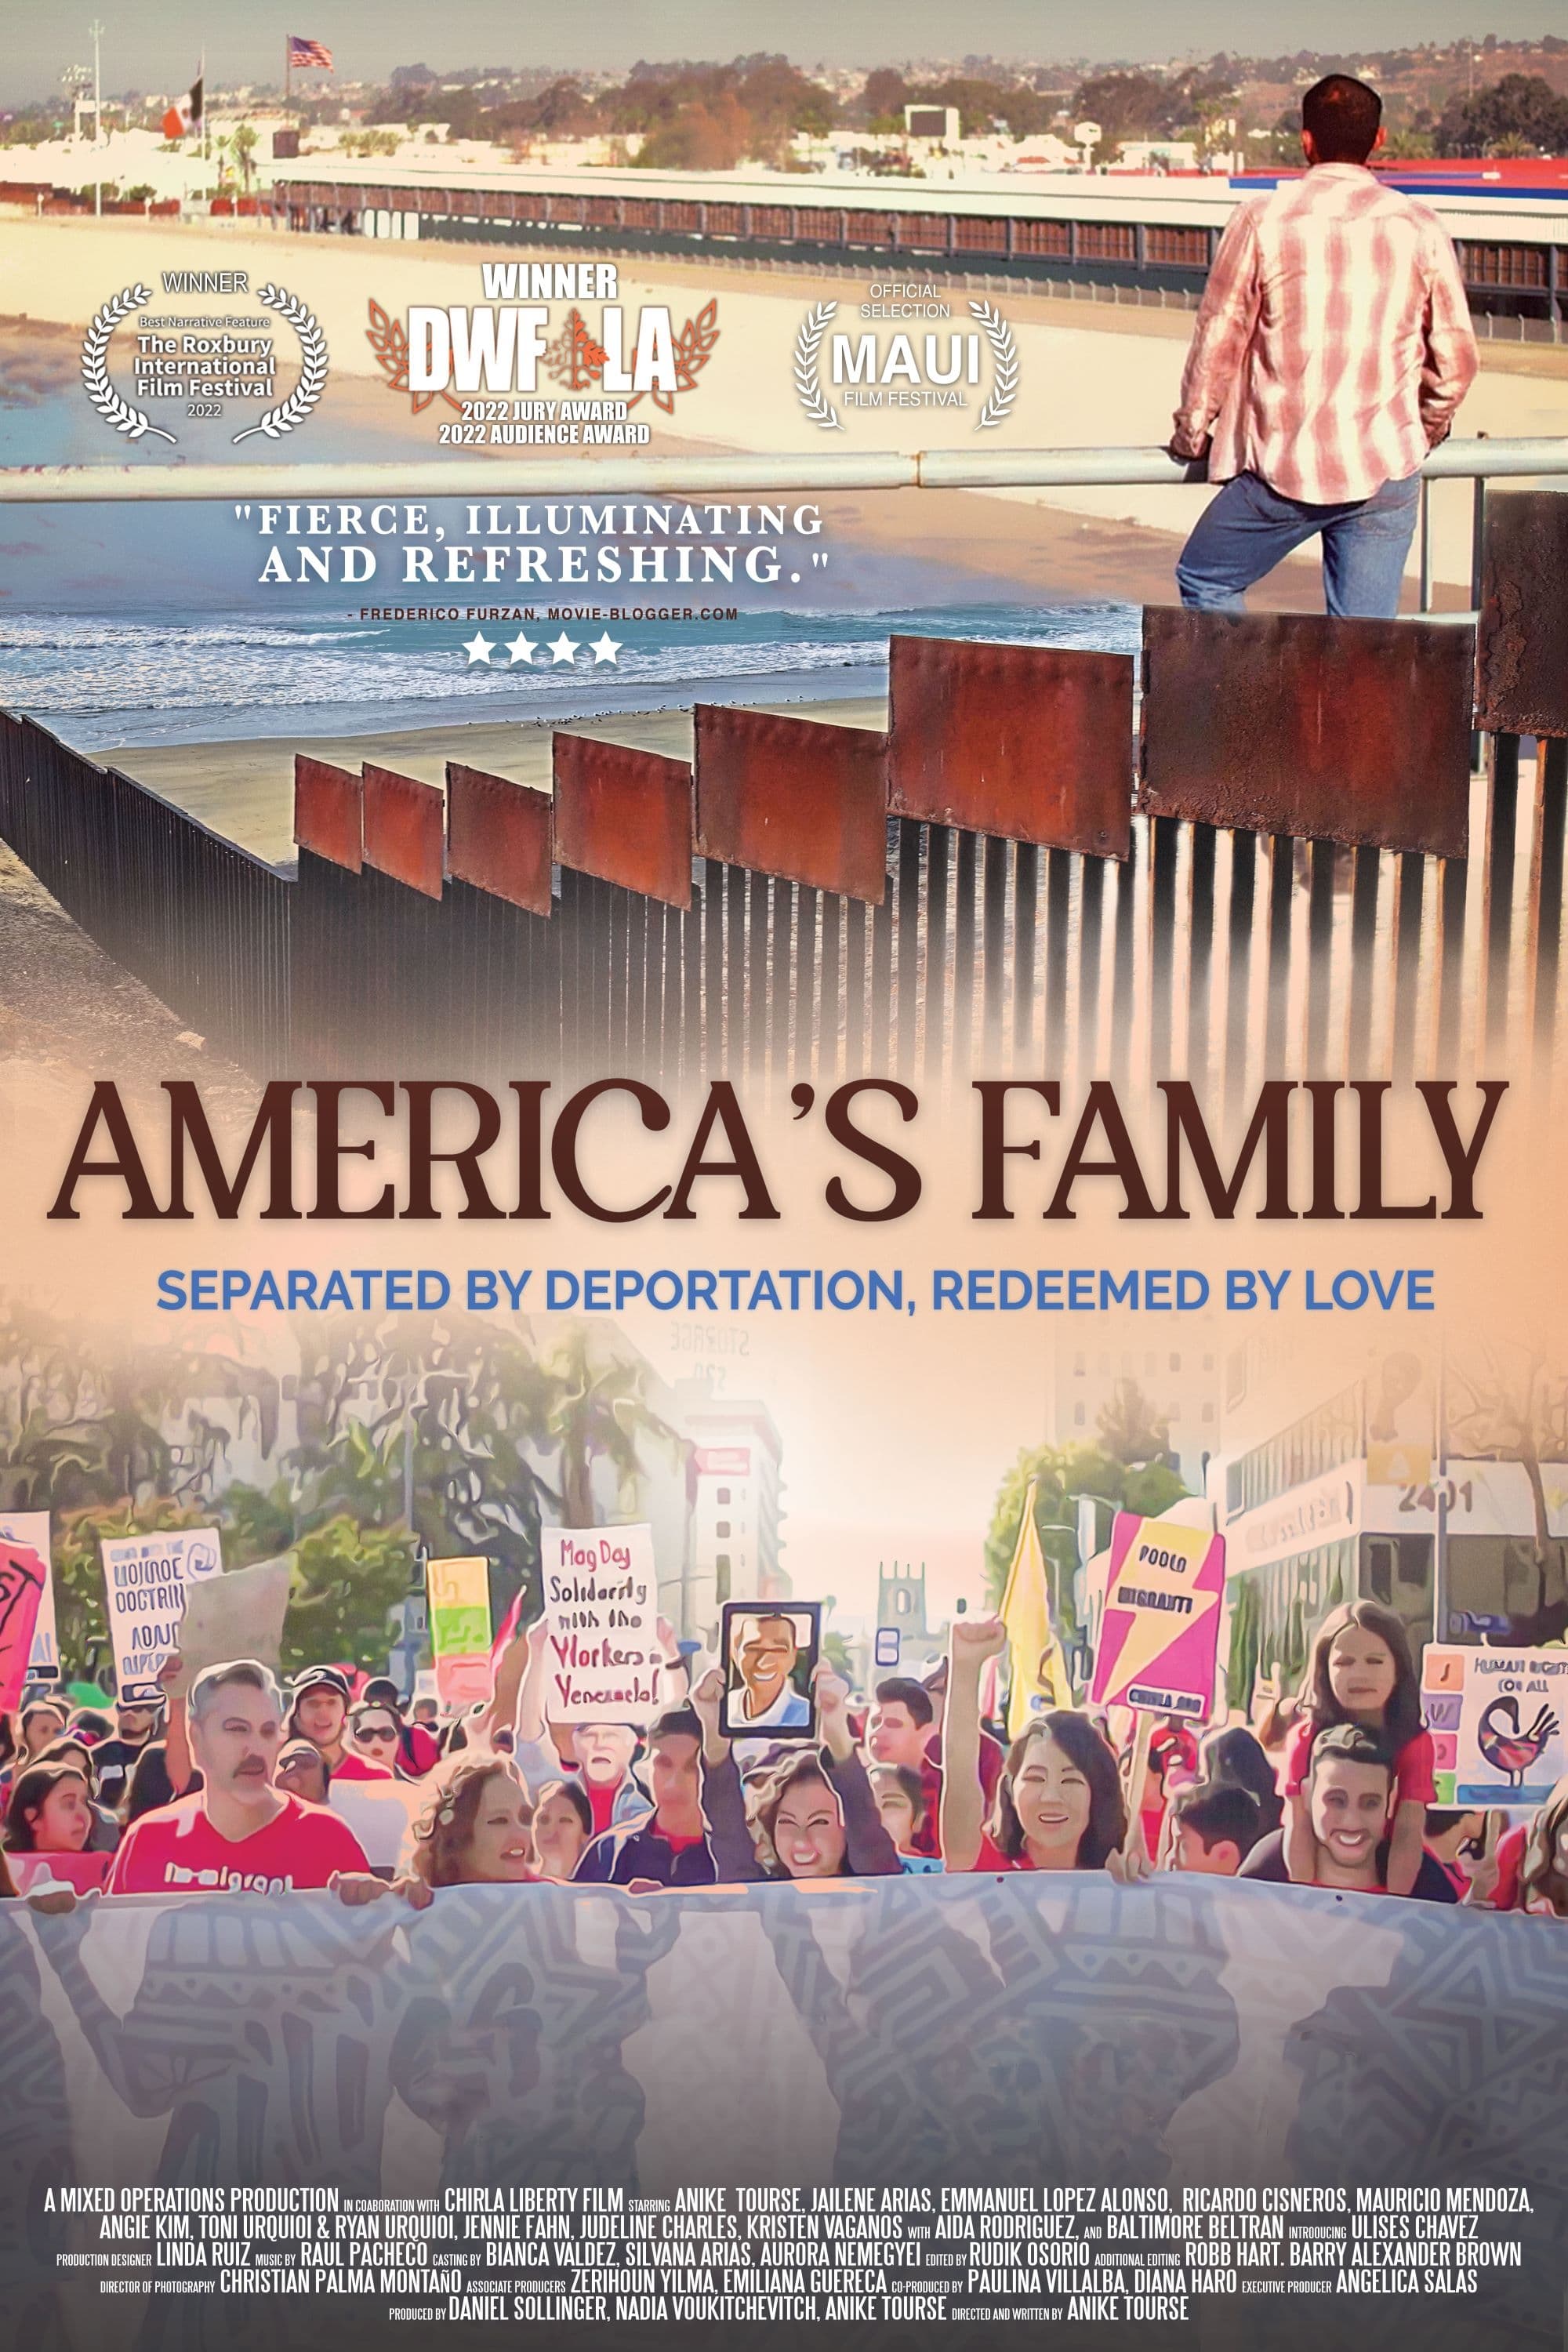 America's Family (2019)